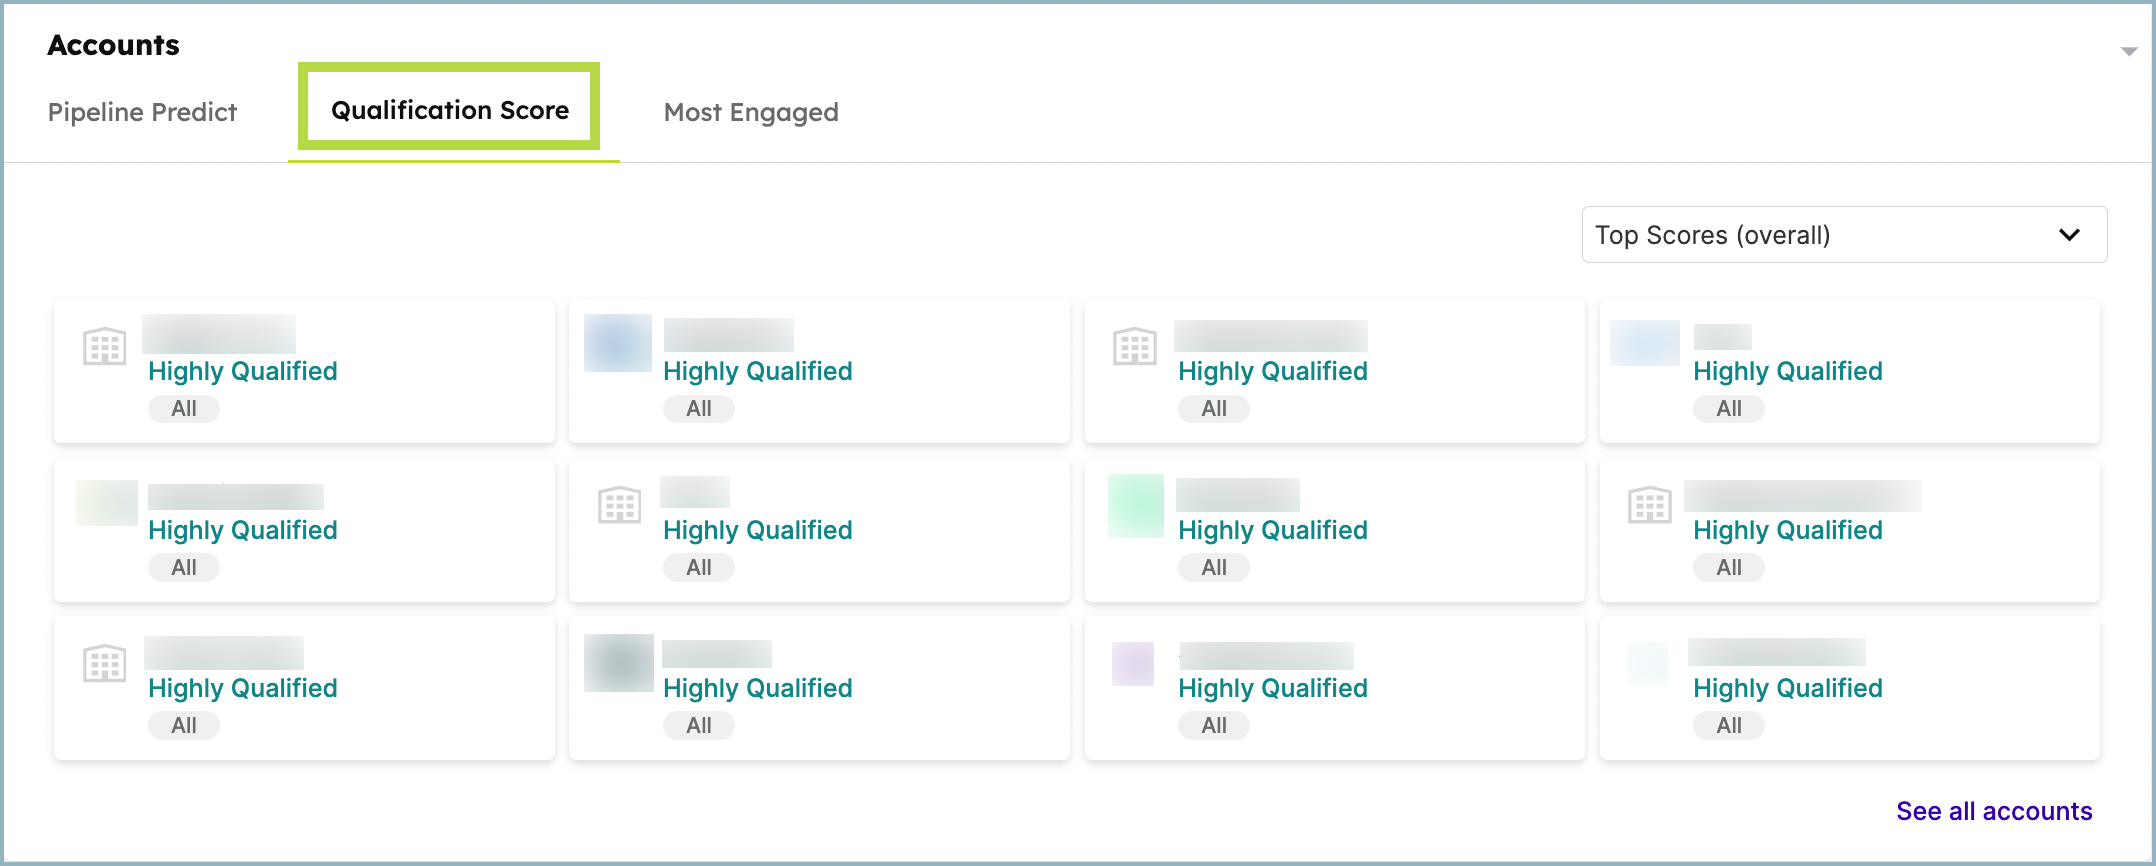 Qualification_Score_Accounts.png